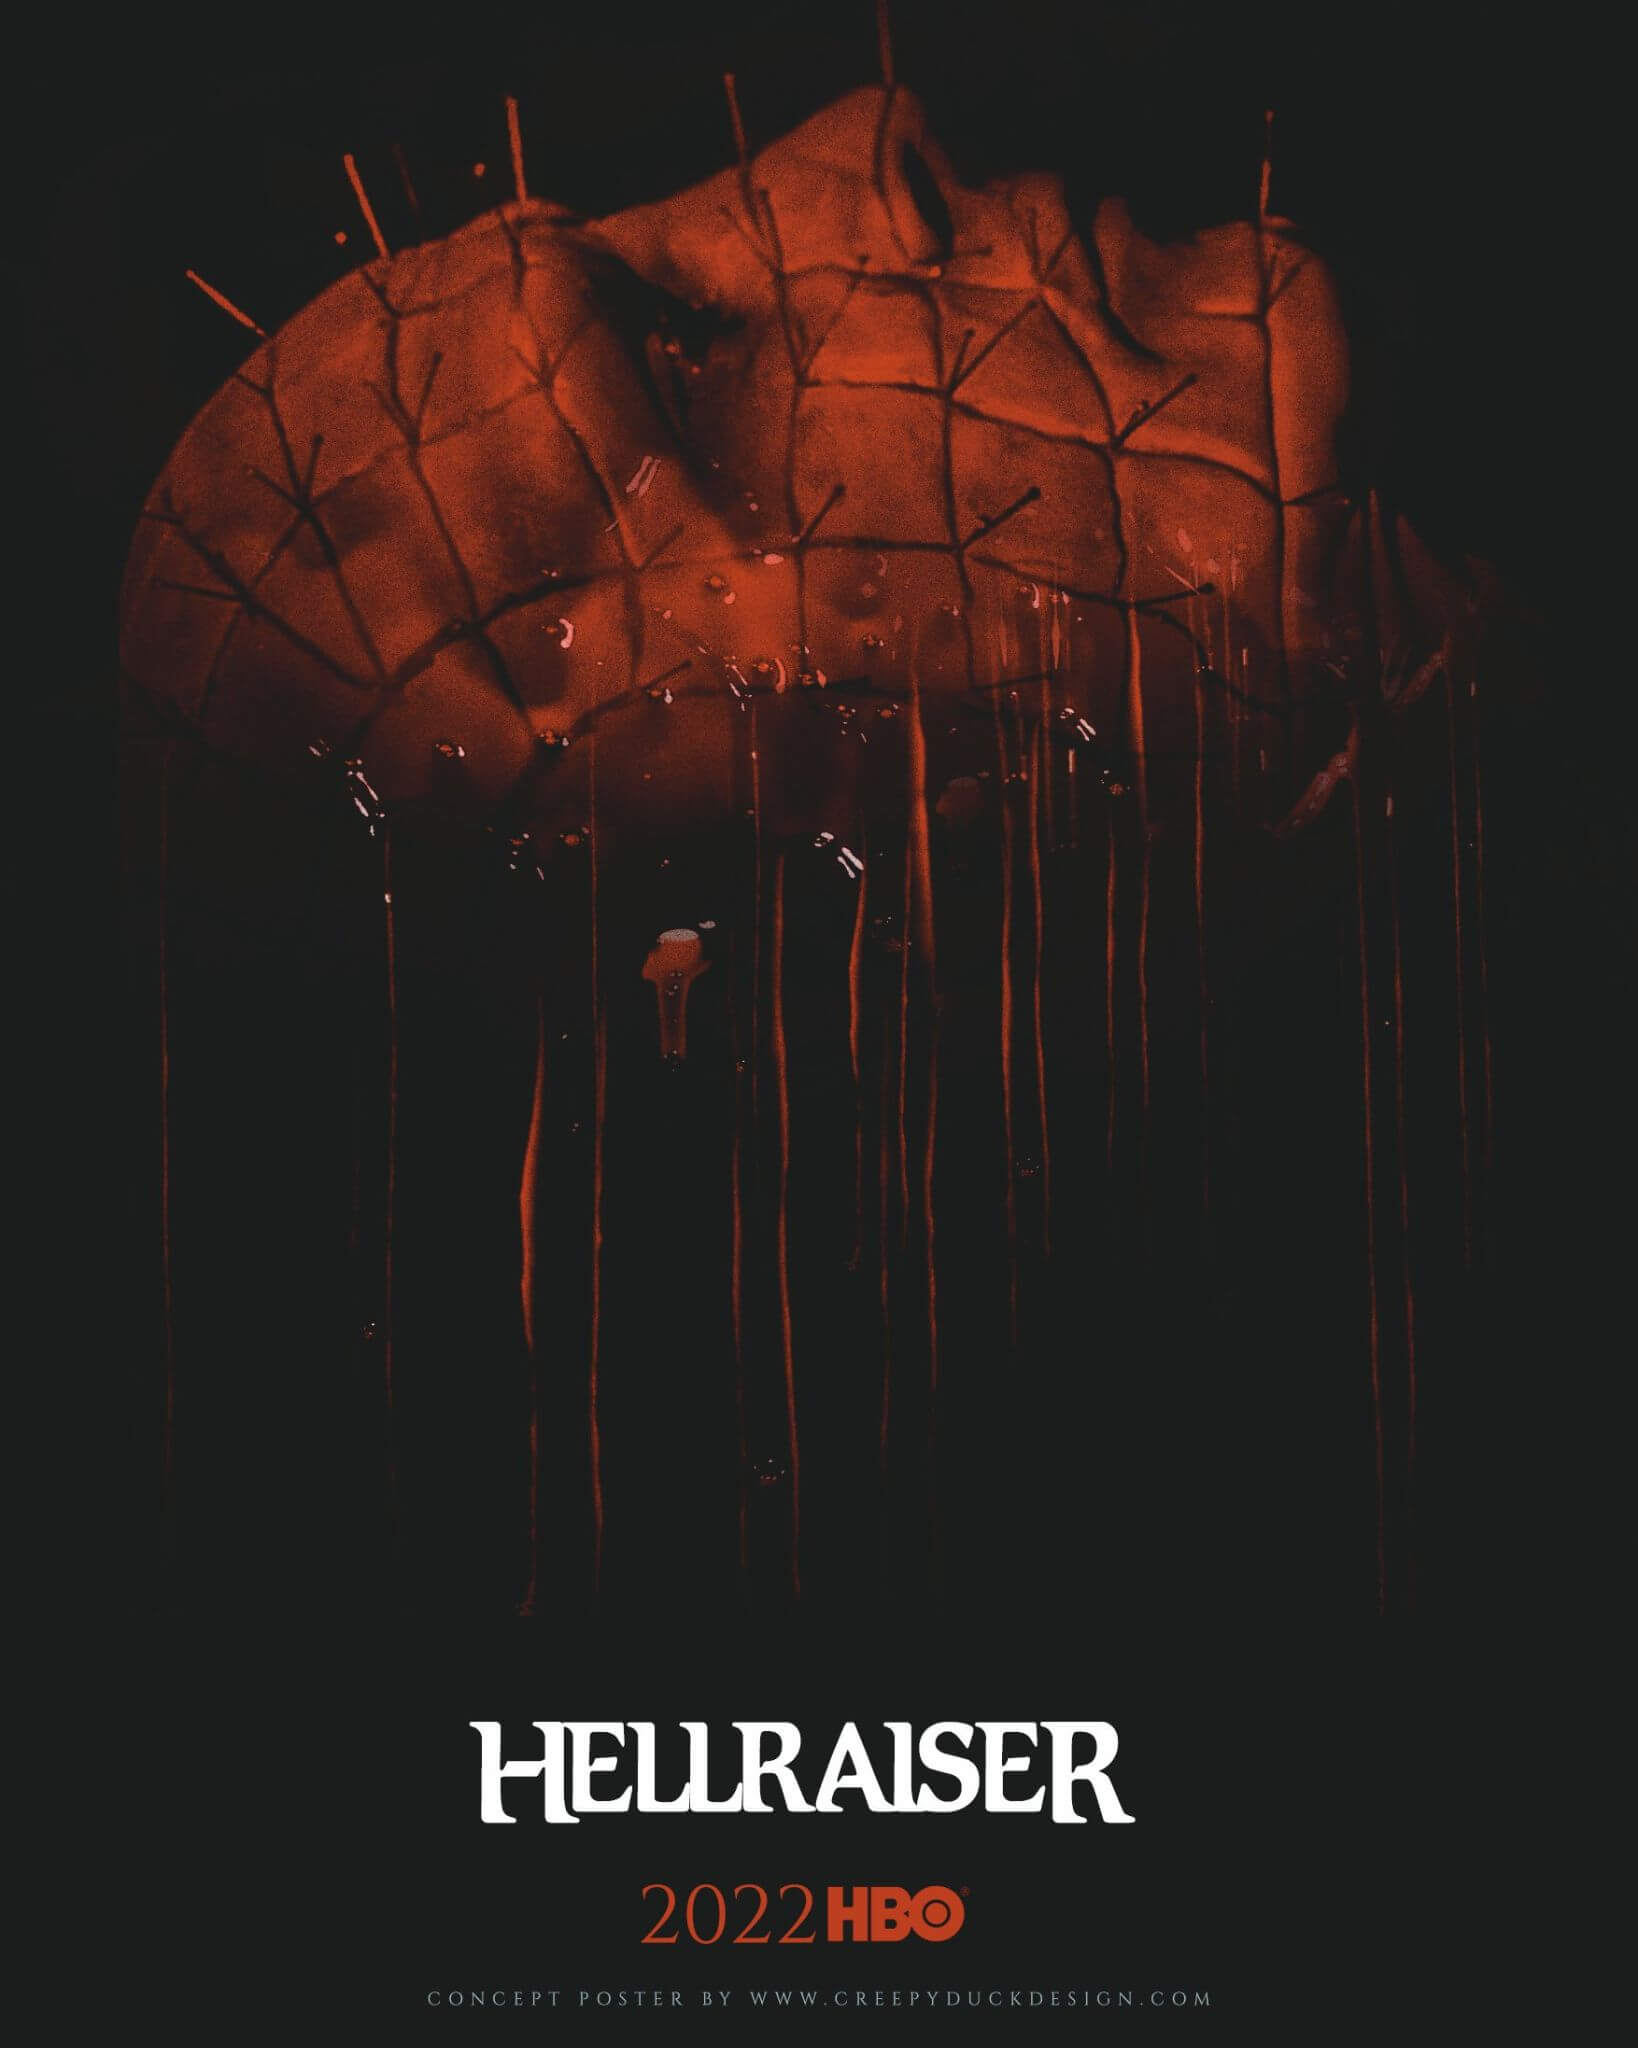 Hellraiser Release Date, Plot